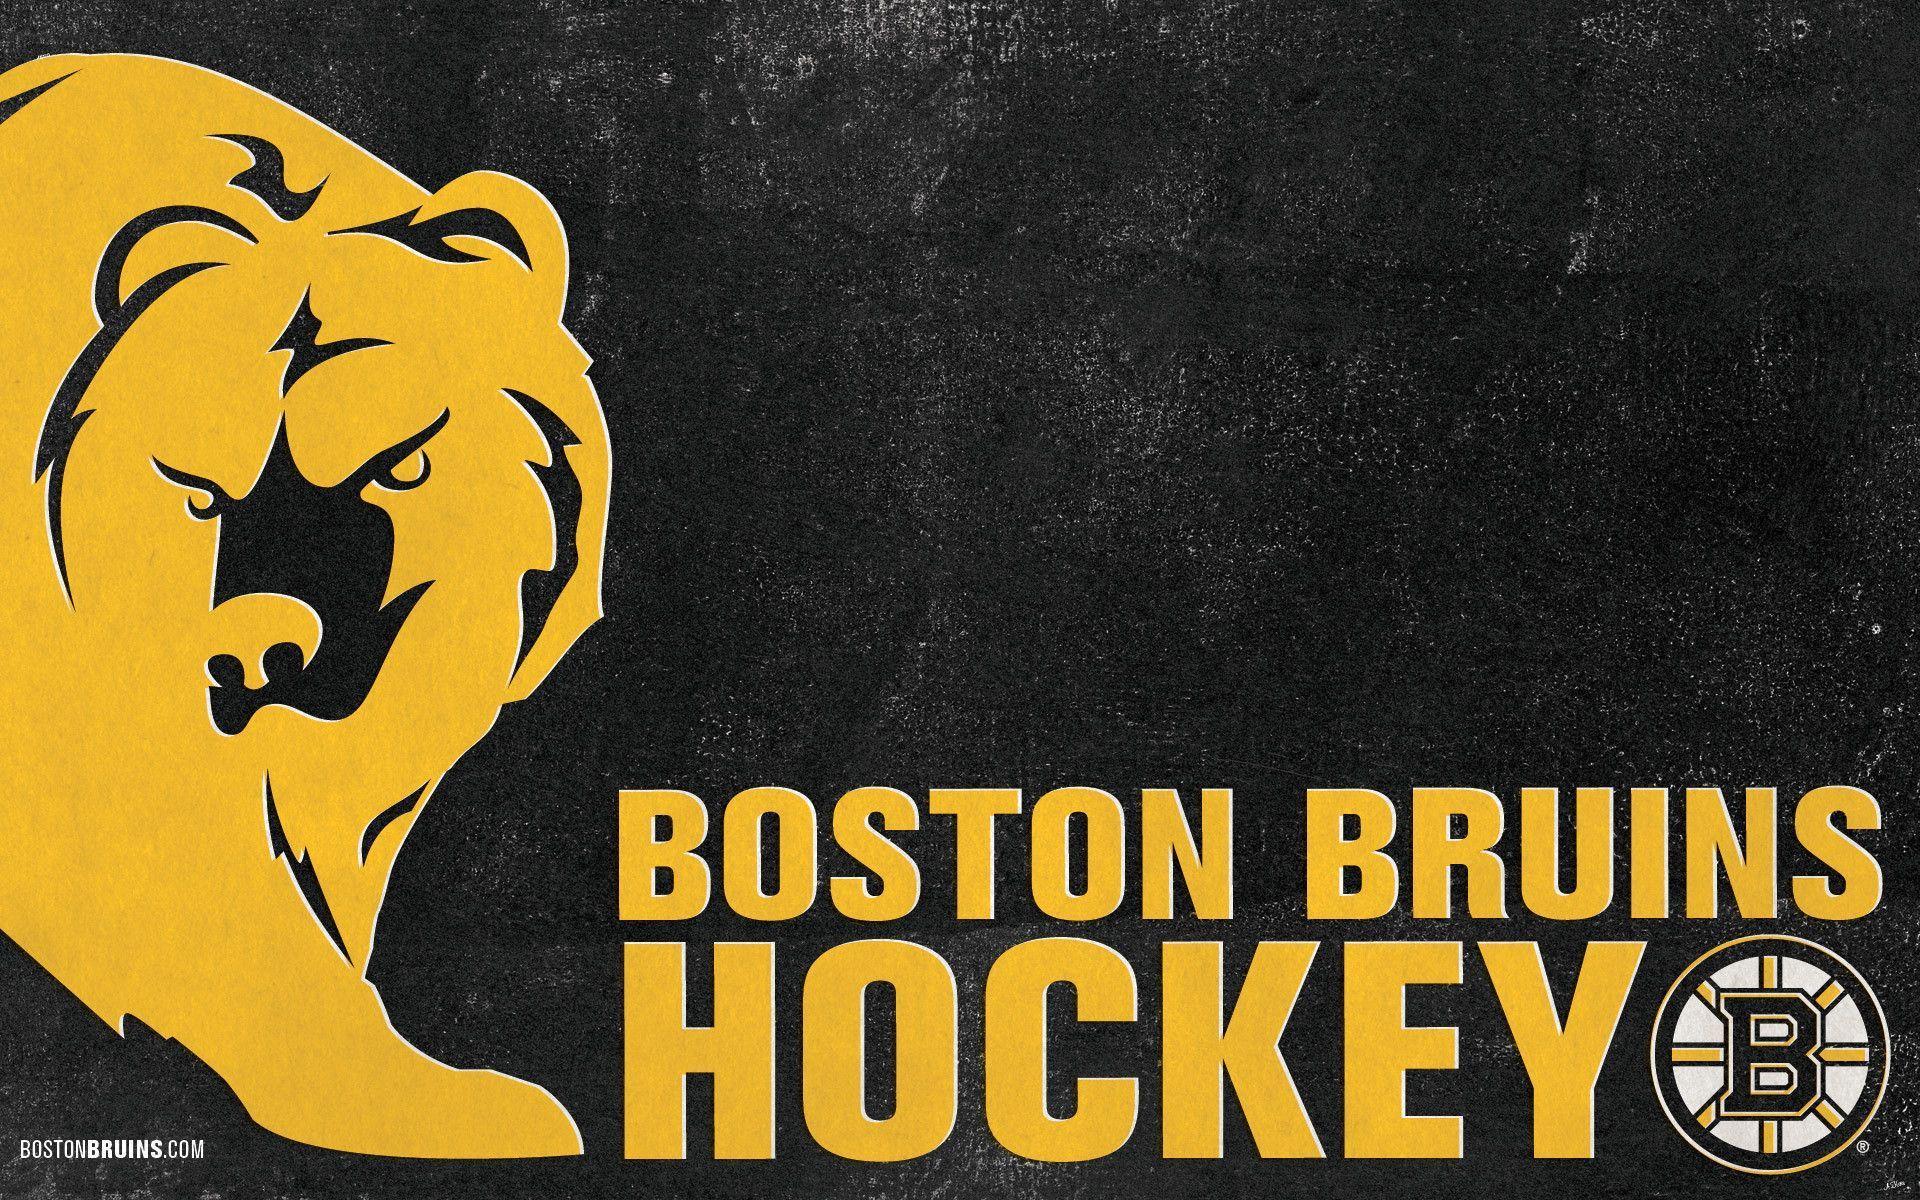 Boston Bruins 2018 Wallpapers - Wallpaper Cave